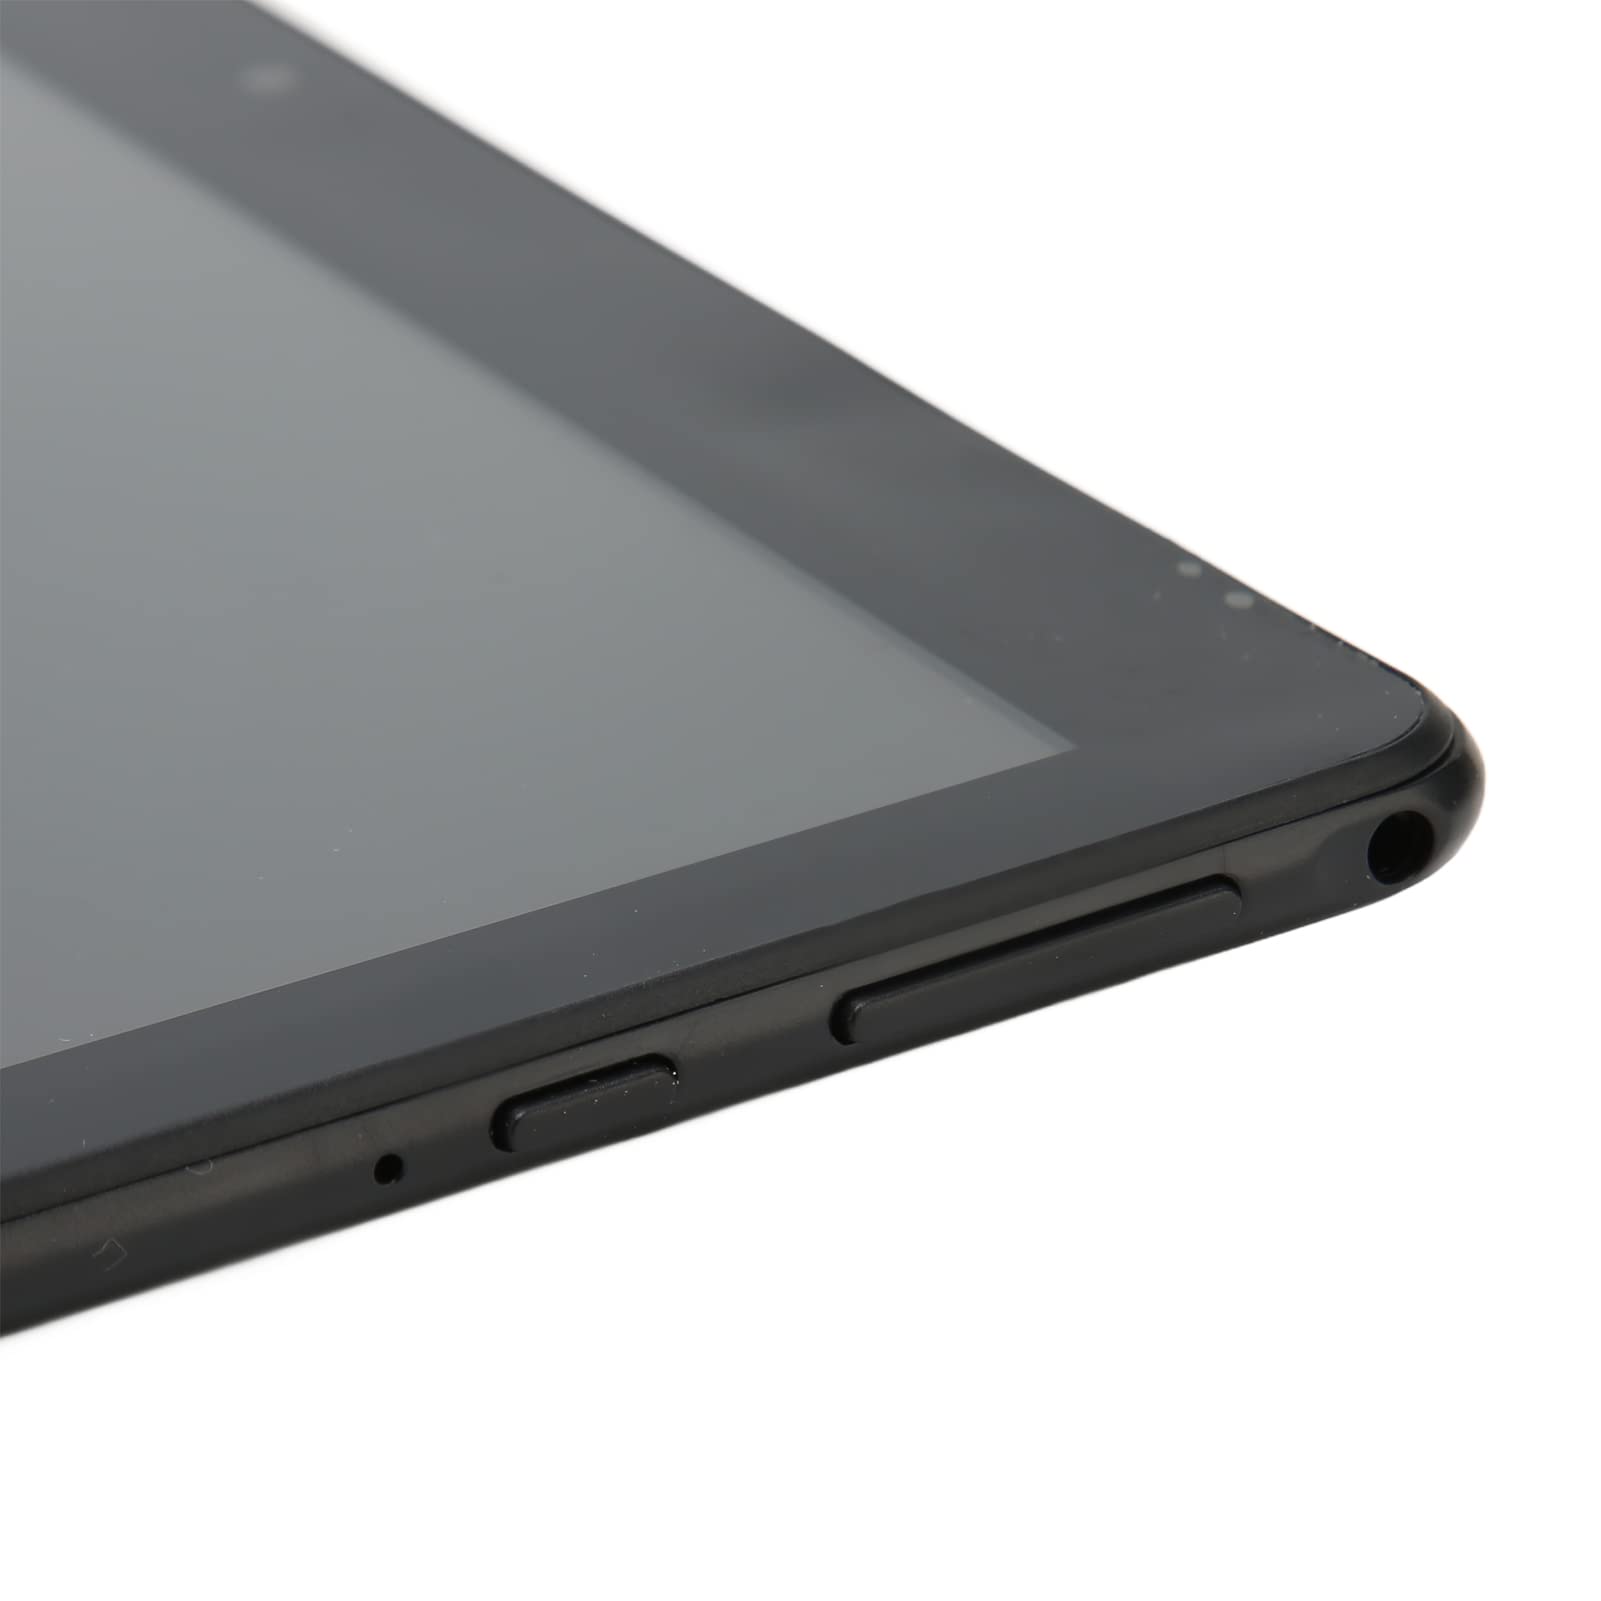 AMONIDA Tablet Computer, 5MP Rear HD Screen Tablet 10.1 Inch Black 2560x1600 (US Plug)